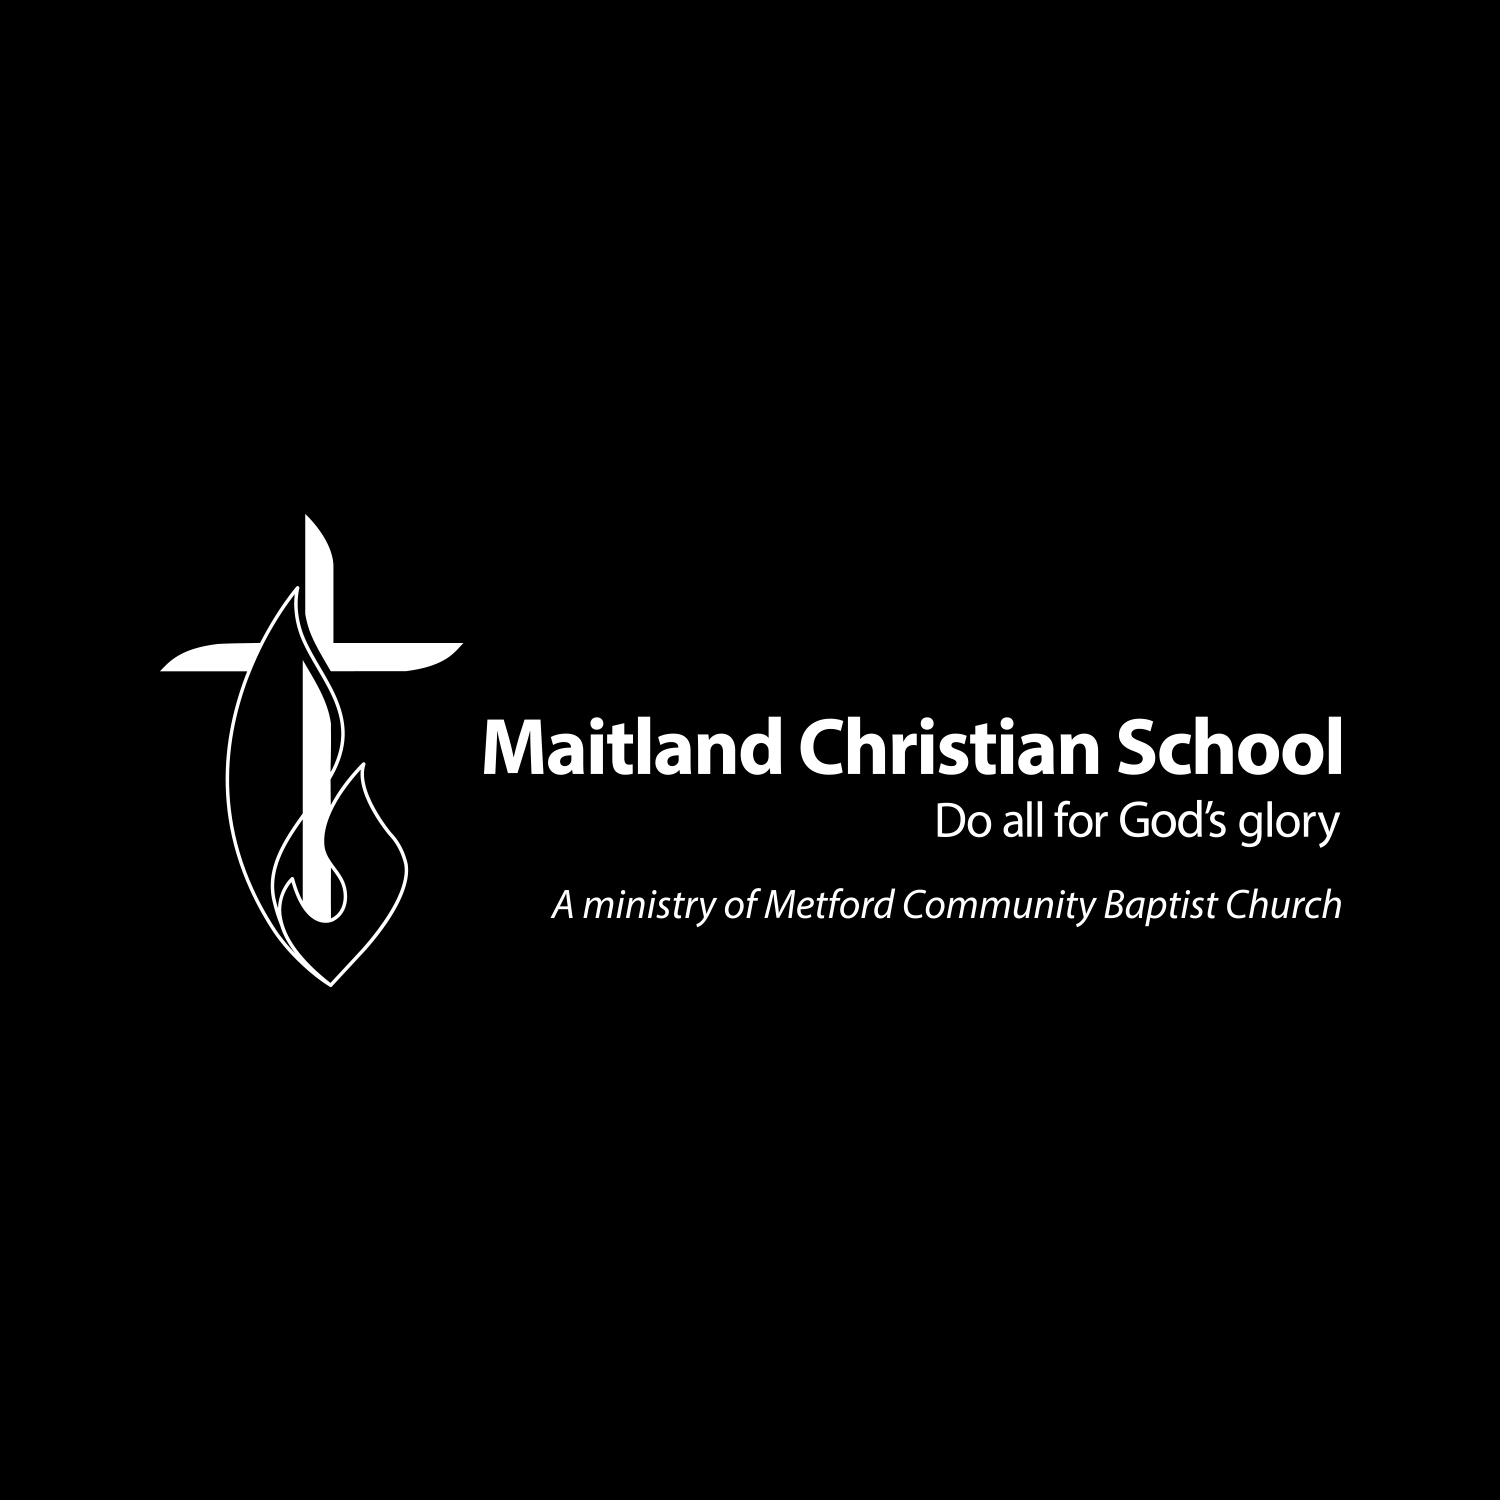 Maitland Christian School